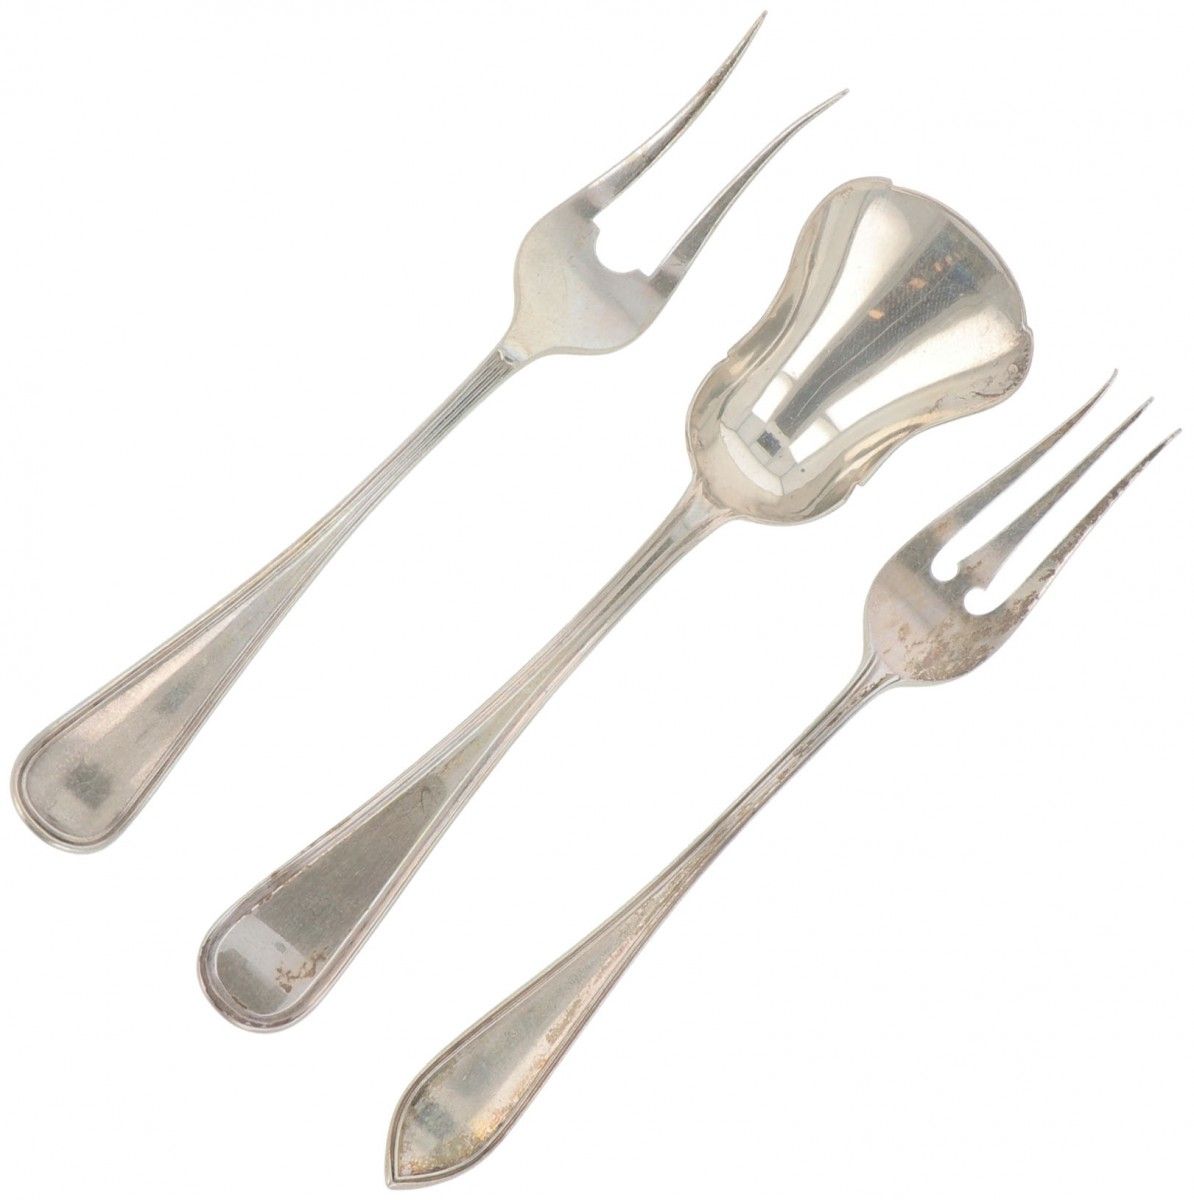 (3) piece lot silverware. 由2把肉叉和一个大糖勺组成。荷兰，20世纪，印记。各种印记 - 有磨损的痕迹。58克，835/1000。估计&hellip;